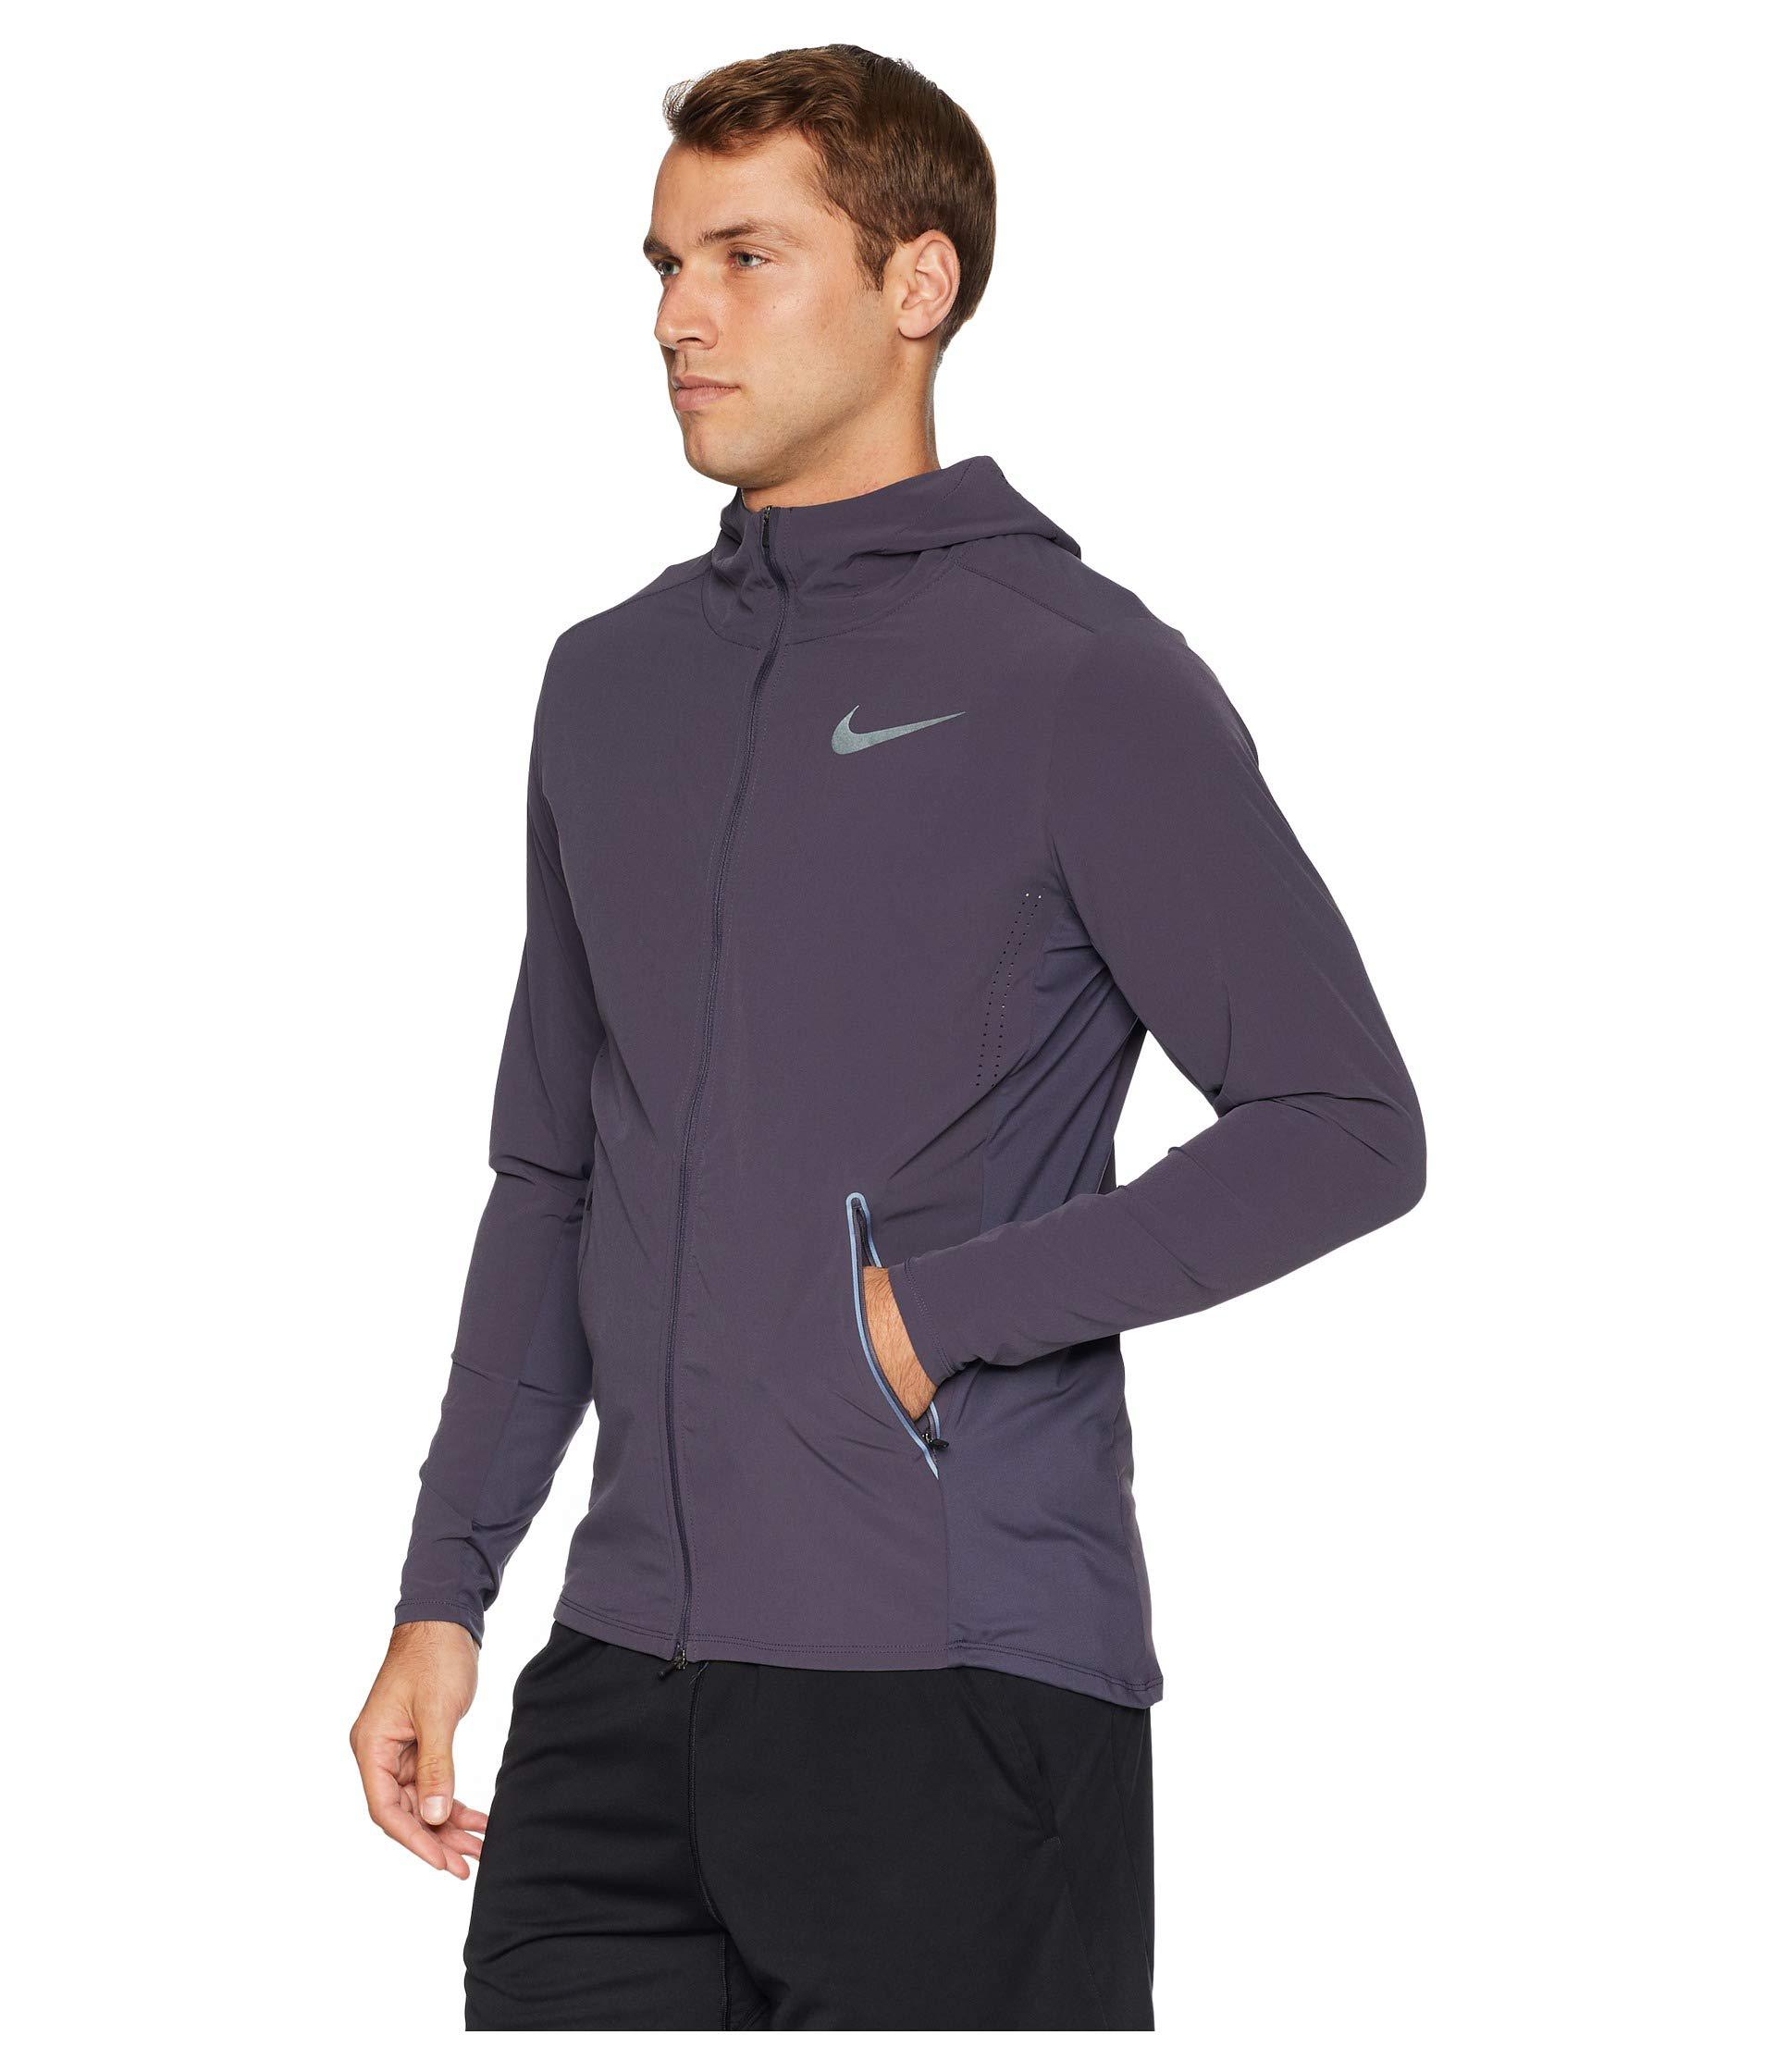 Shopping \u003e purple nike jacket mens, Up 